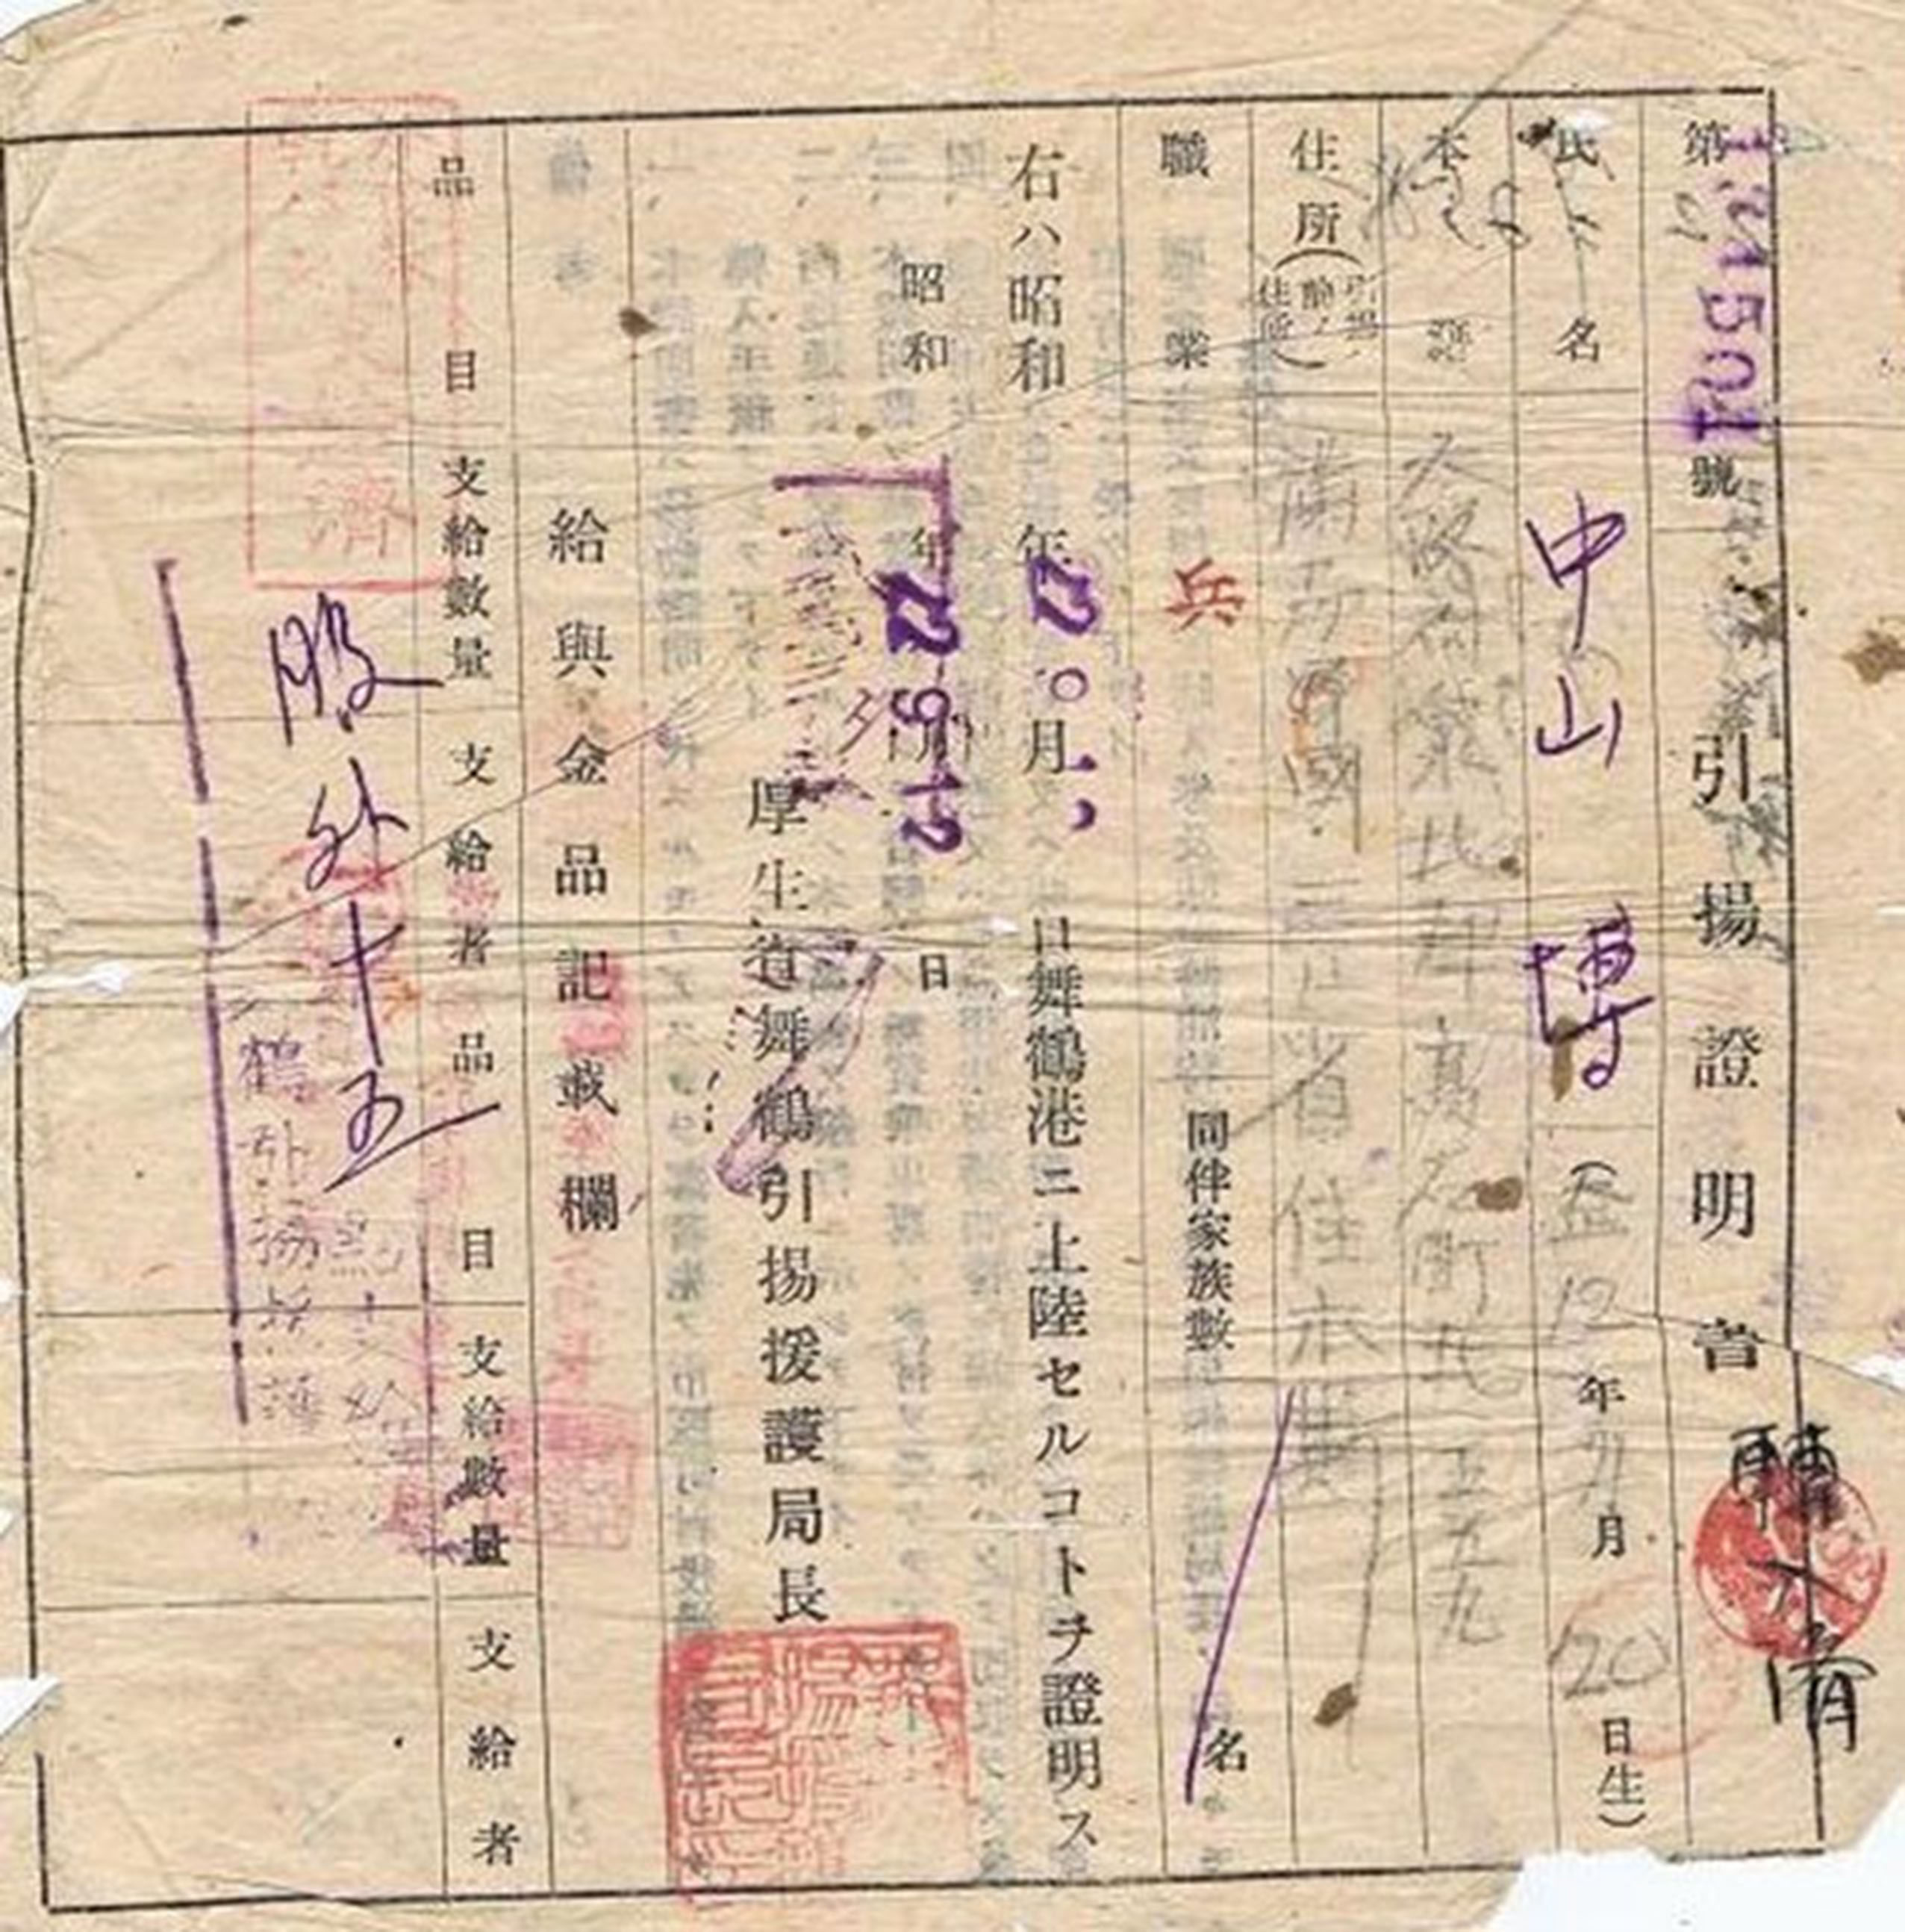 Certificate of repatriation